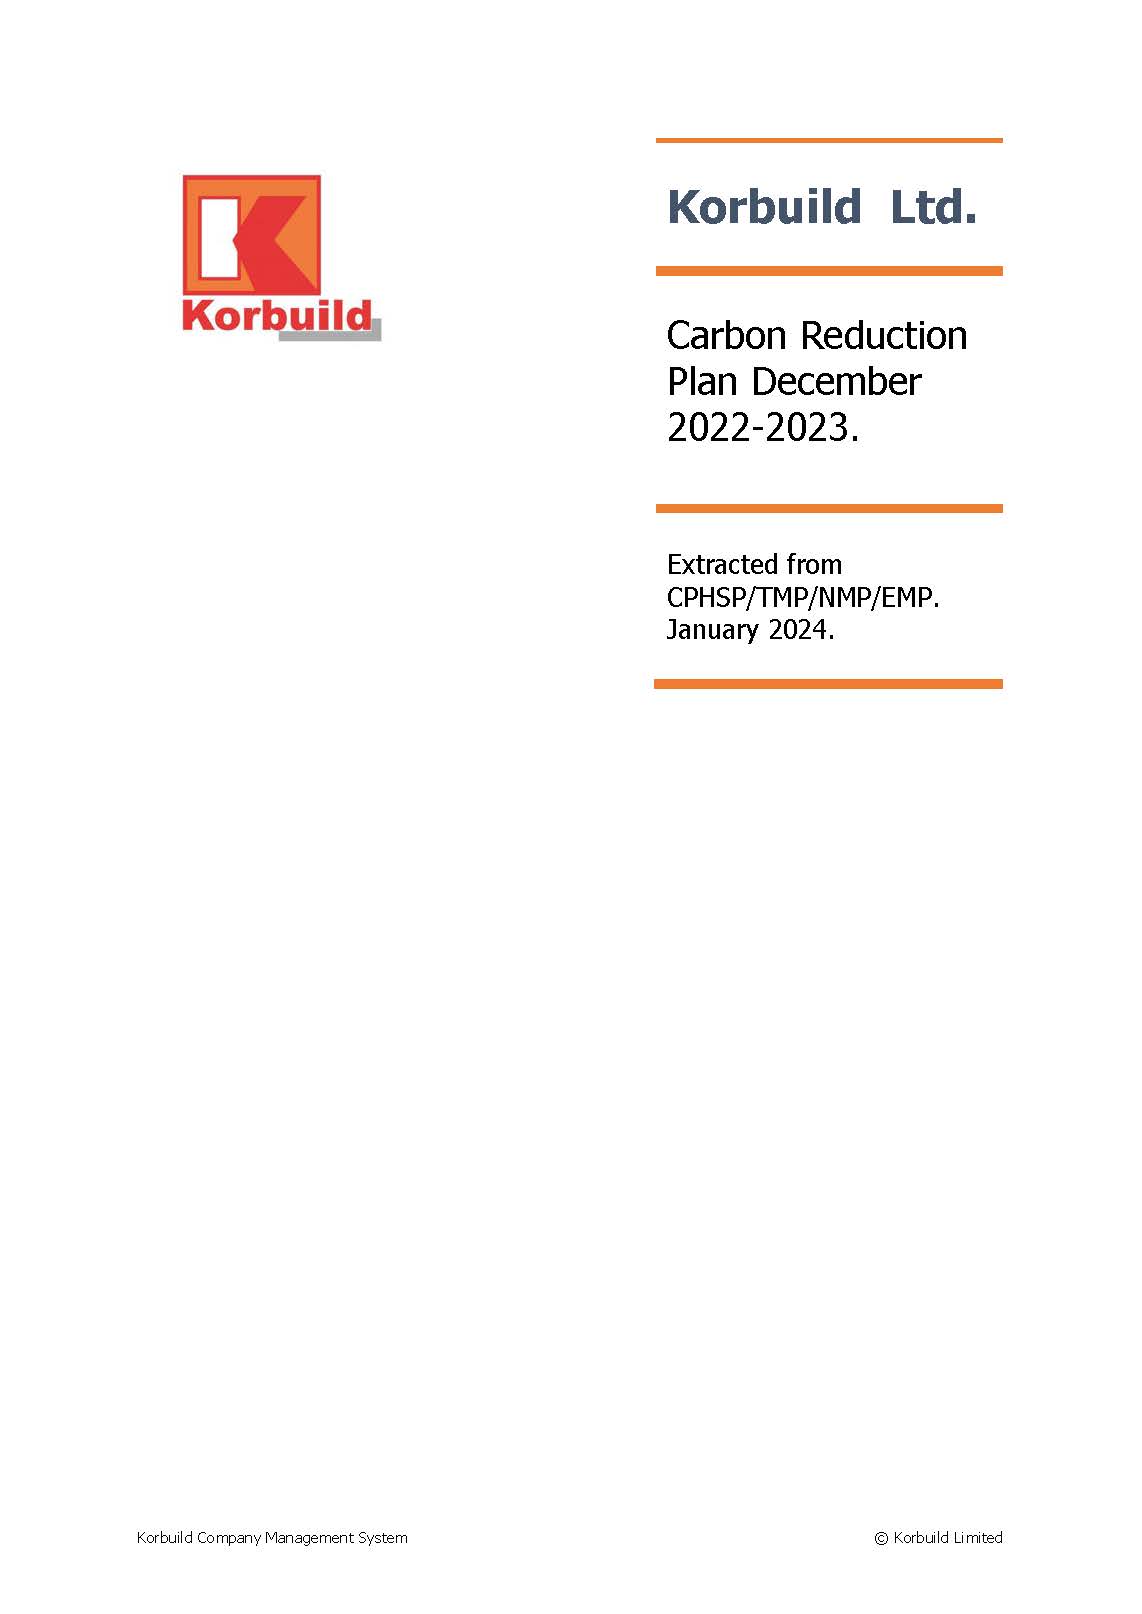 Korbuild Carbon Reduction Plan